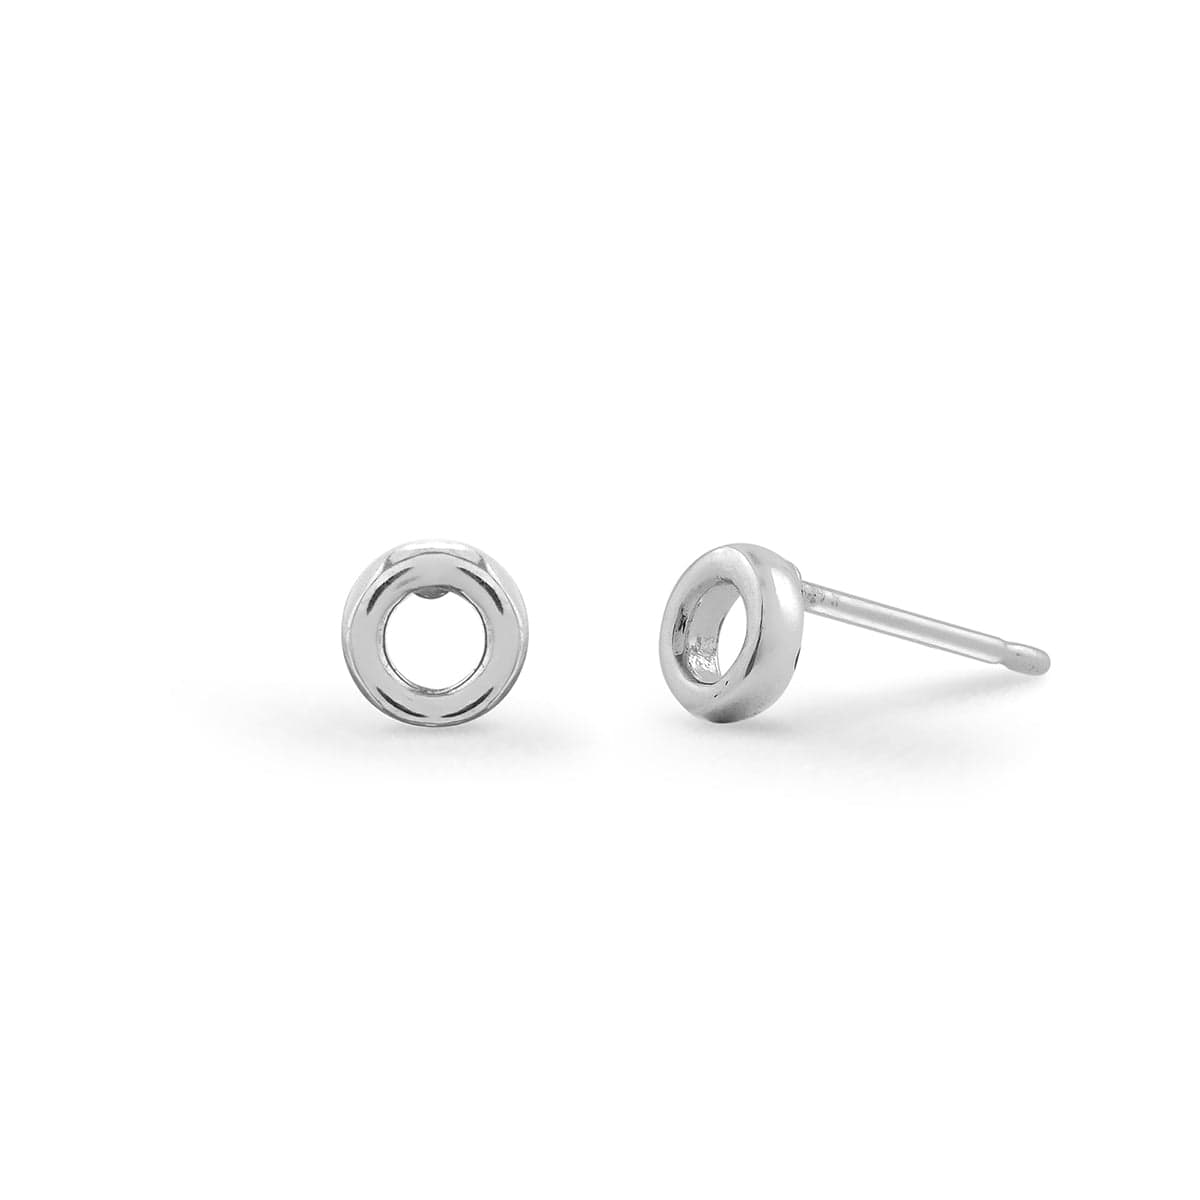 Boma Jewelry Earrings Sterling Silver Mini open circle studs earring sterling silver